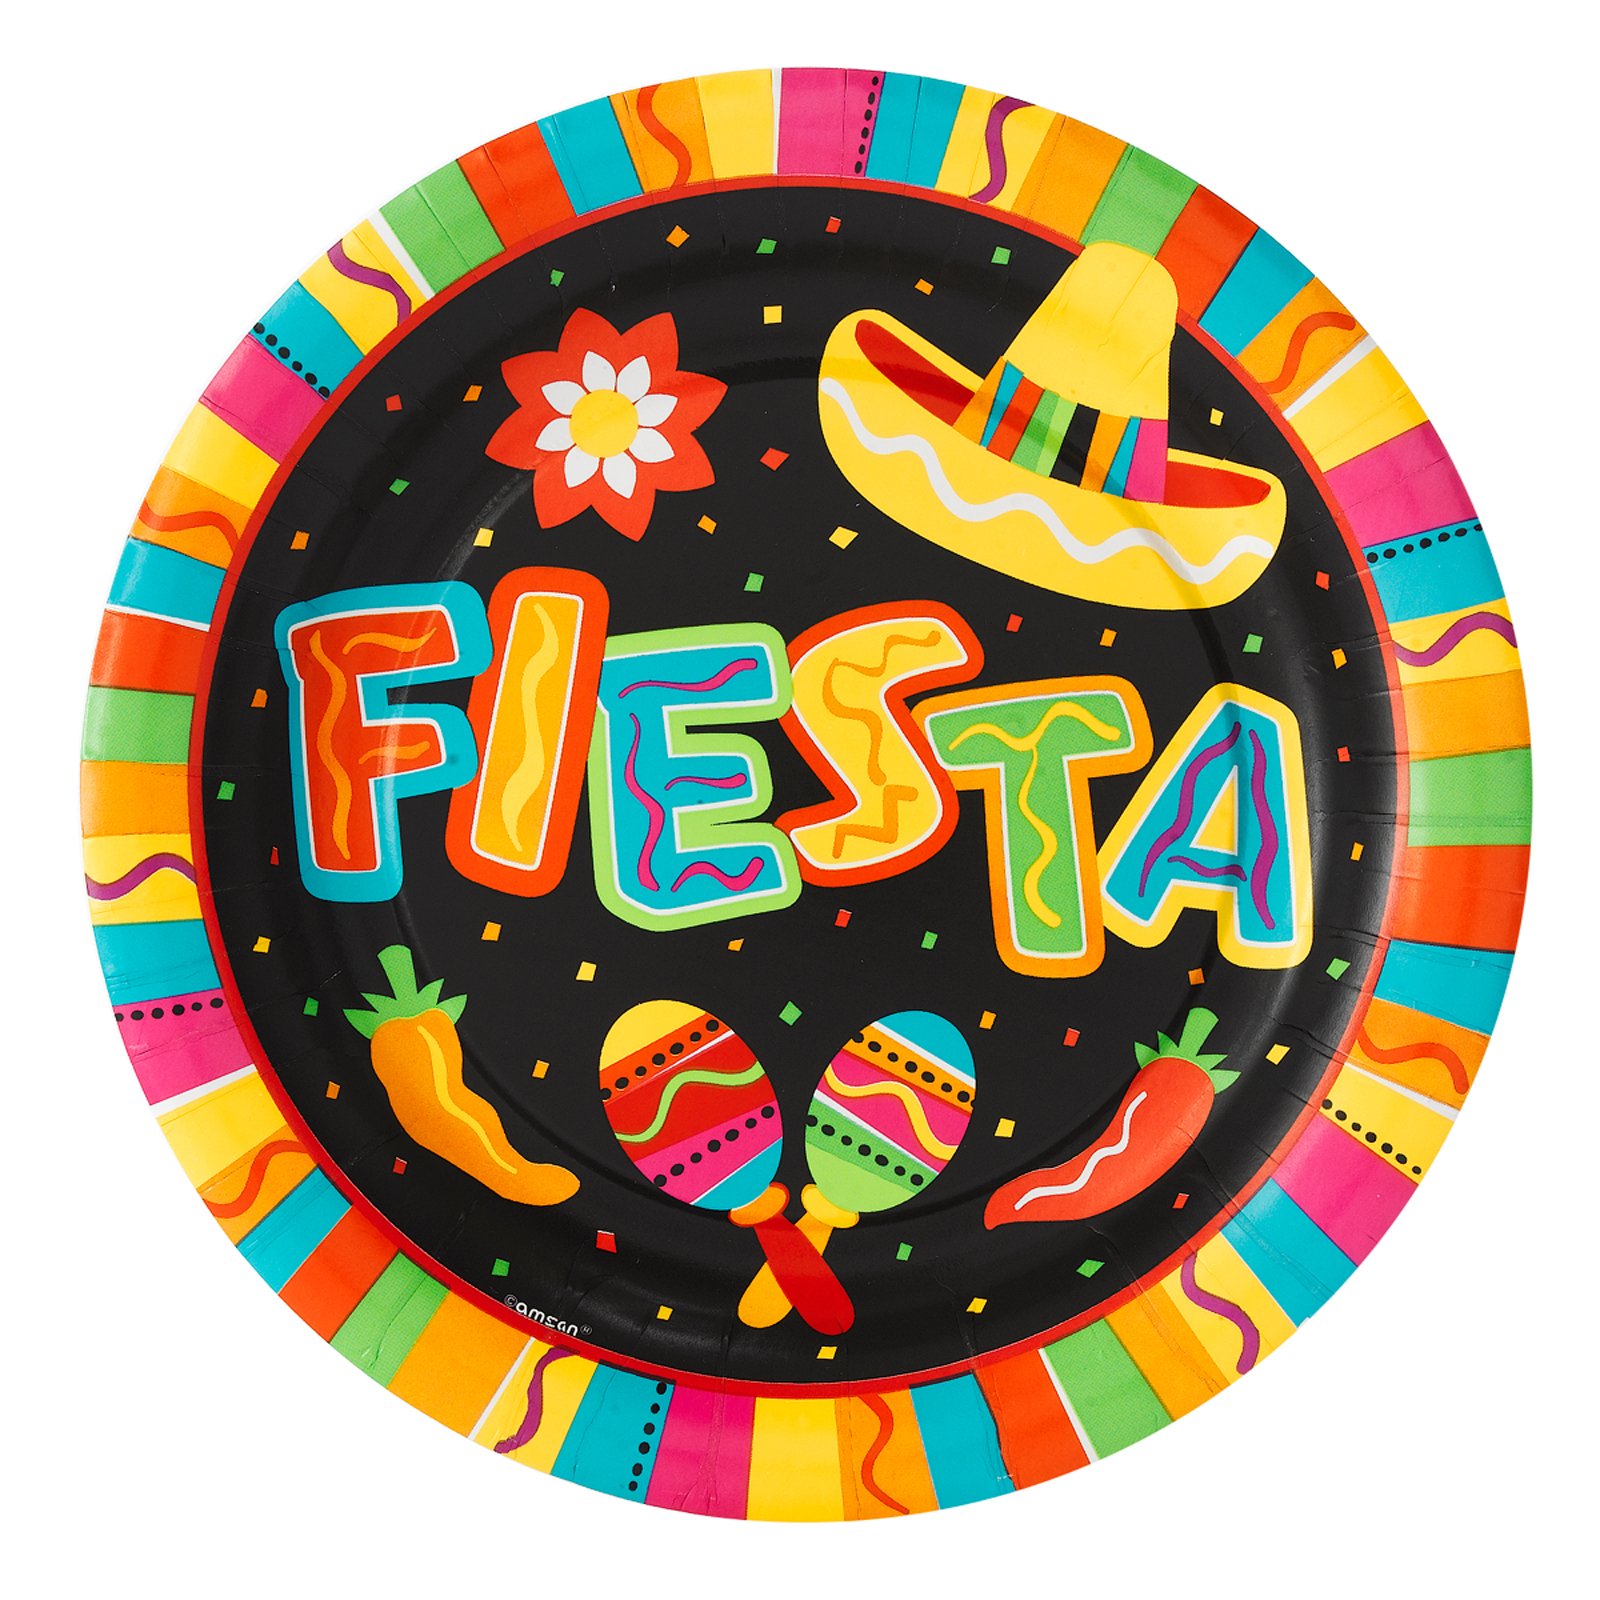 Fiesta quette Crowd Etiquette for Outdoor Events